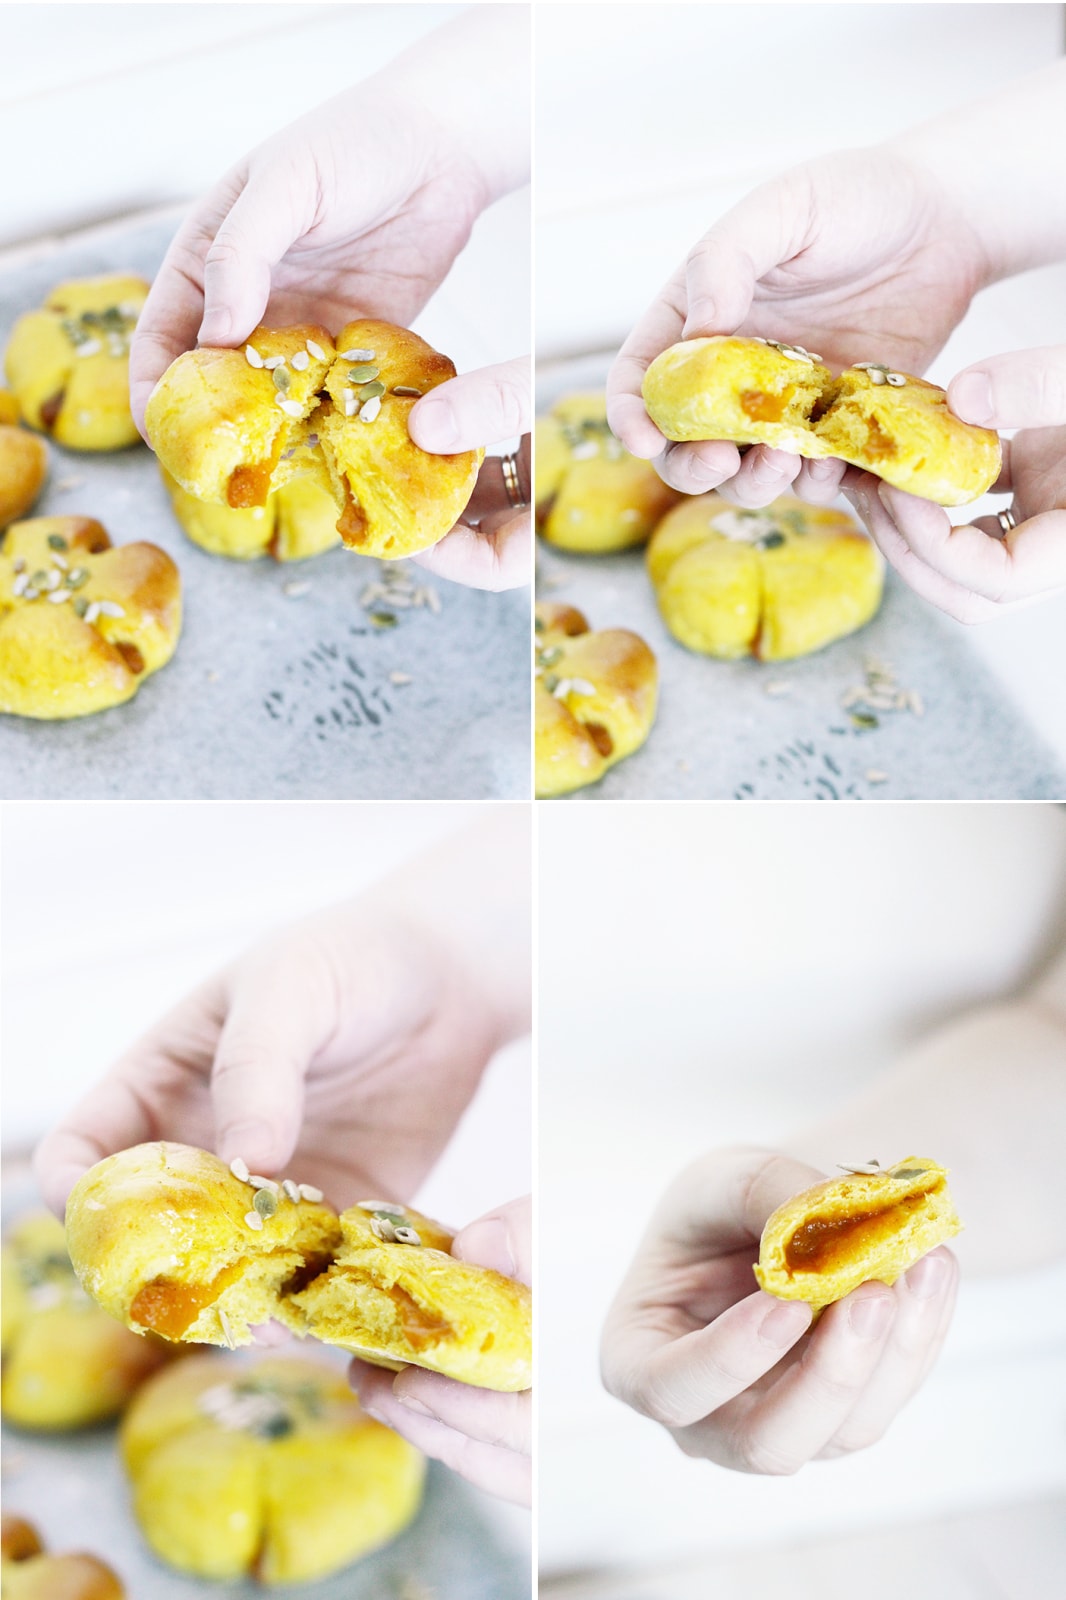 Vegan Pumpkin Buns with oozing pumpkin filling, coated in vanilla bean glaze. #vegan #pumpkin #recipe | CrazyVeganKitchen.com